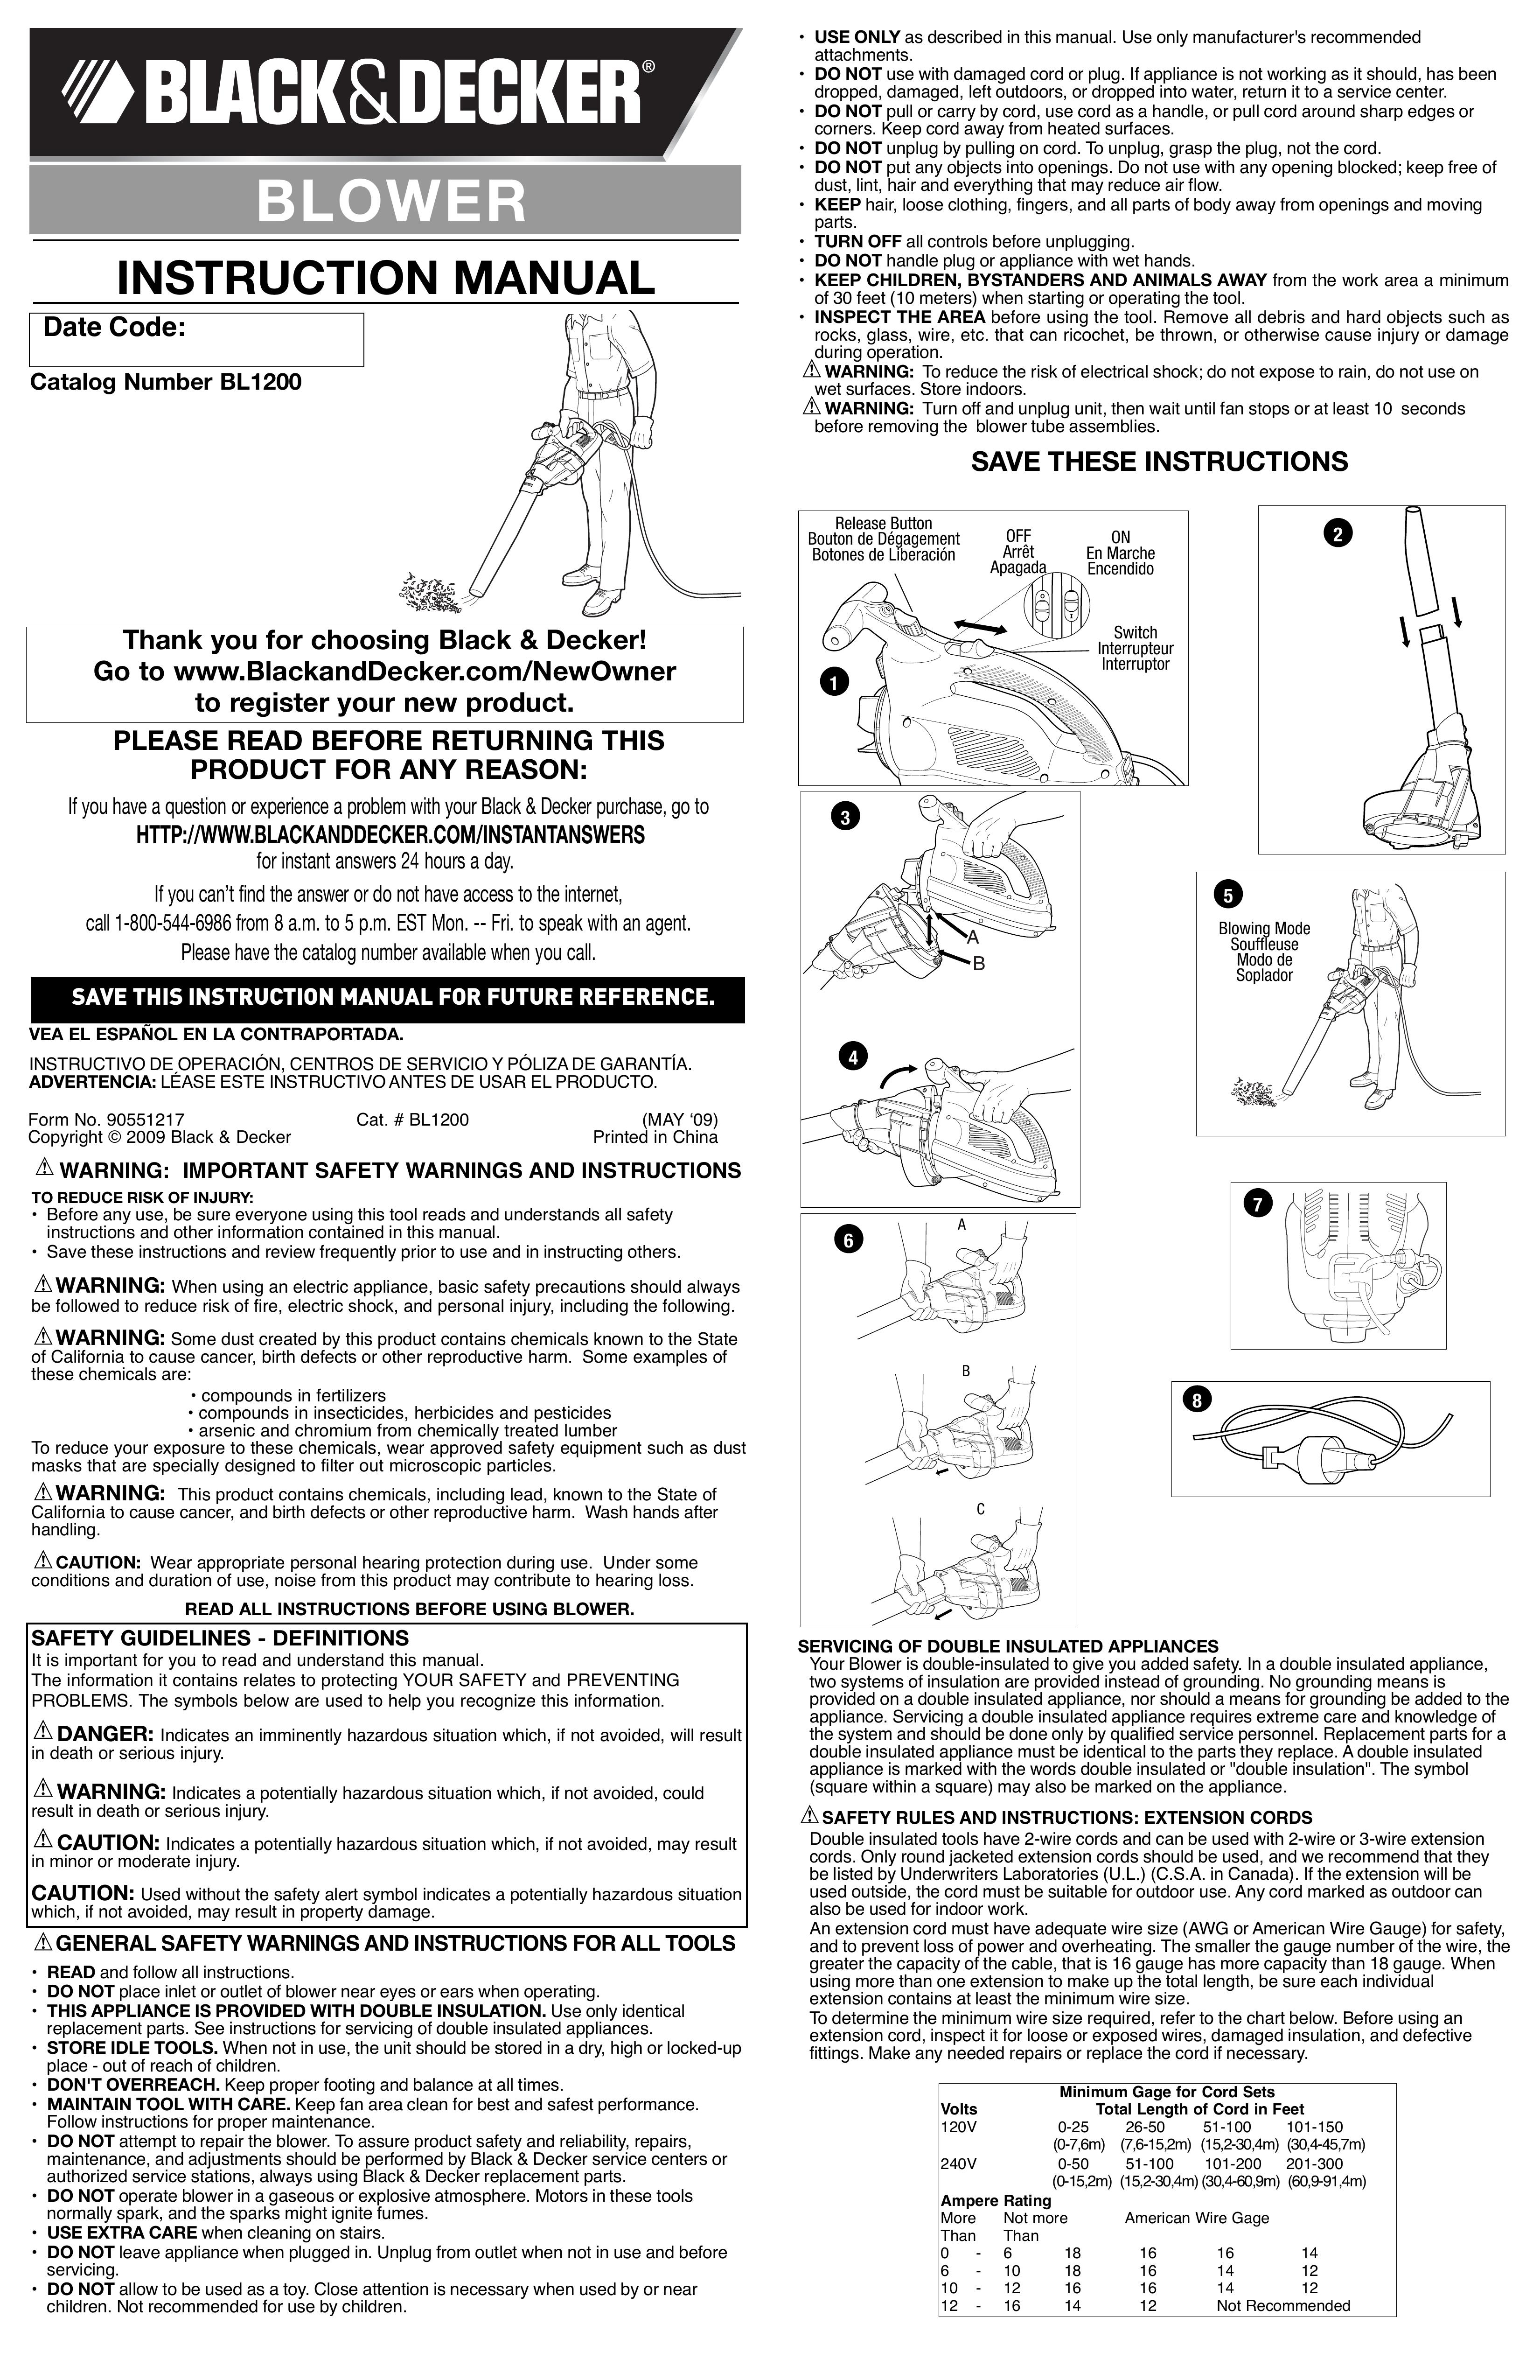 Black & Decker 90551217 Blower User Manual